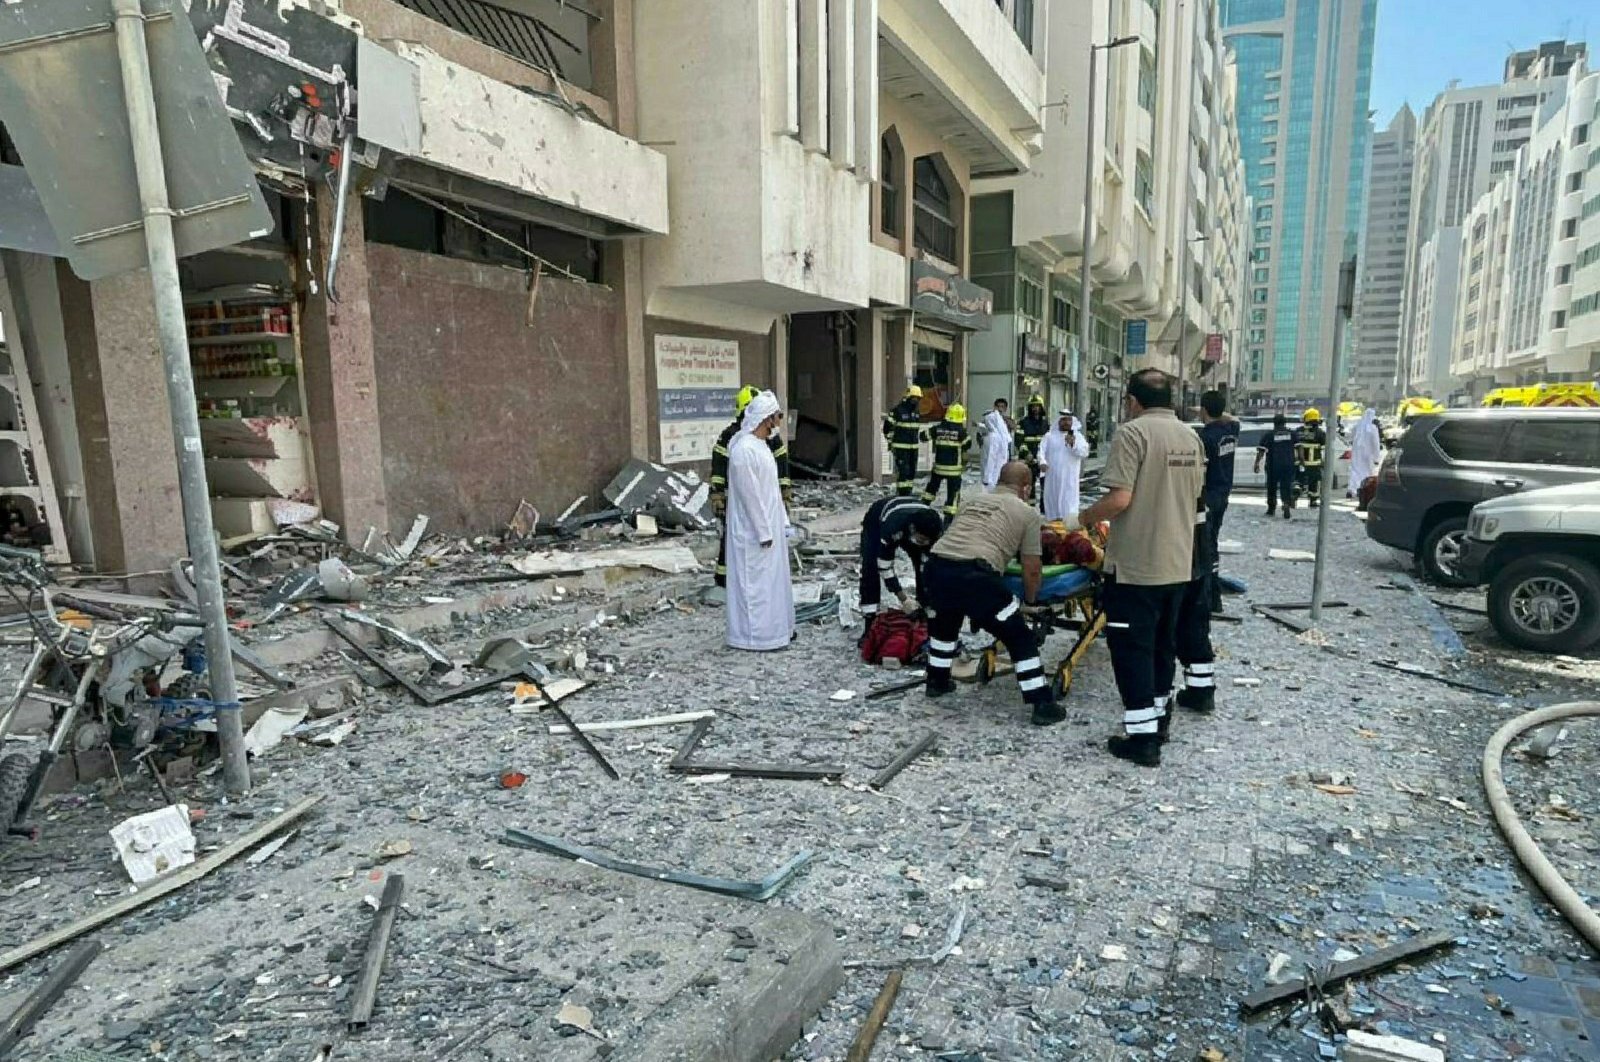 Debris covers the street after an explosion in the Khalidiya district of Abu Dhabi, UAE, May 23, 2022. (Abu Dhabi Police via AP)